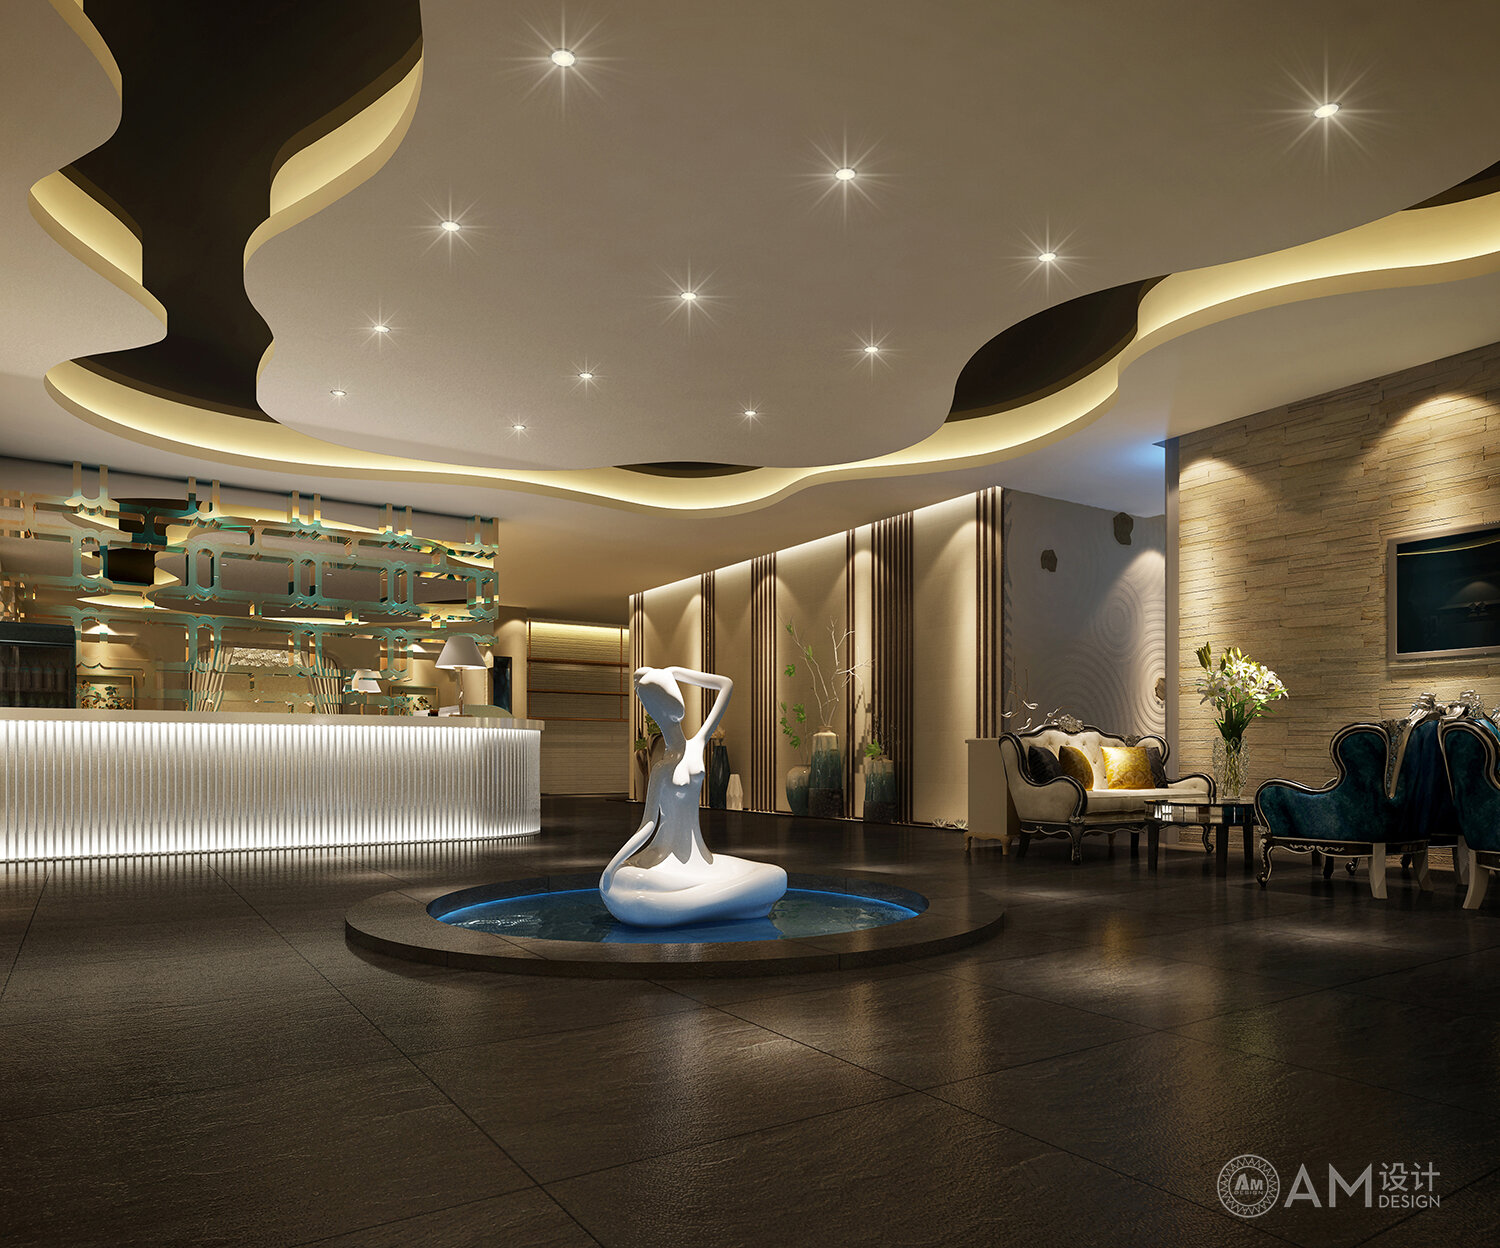 AM | Design of huajiantang high temperature Yoga Club